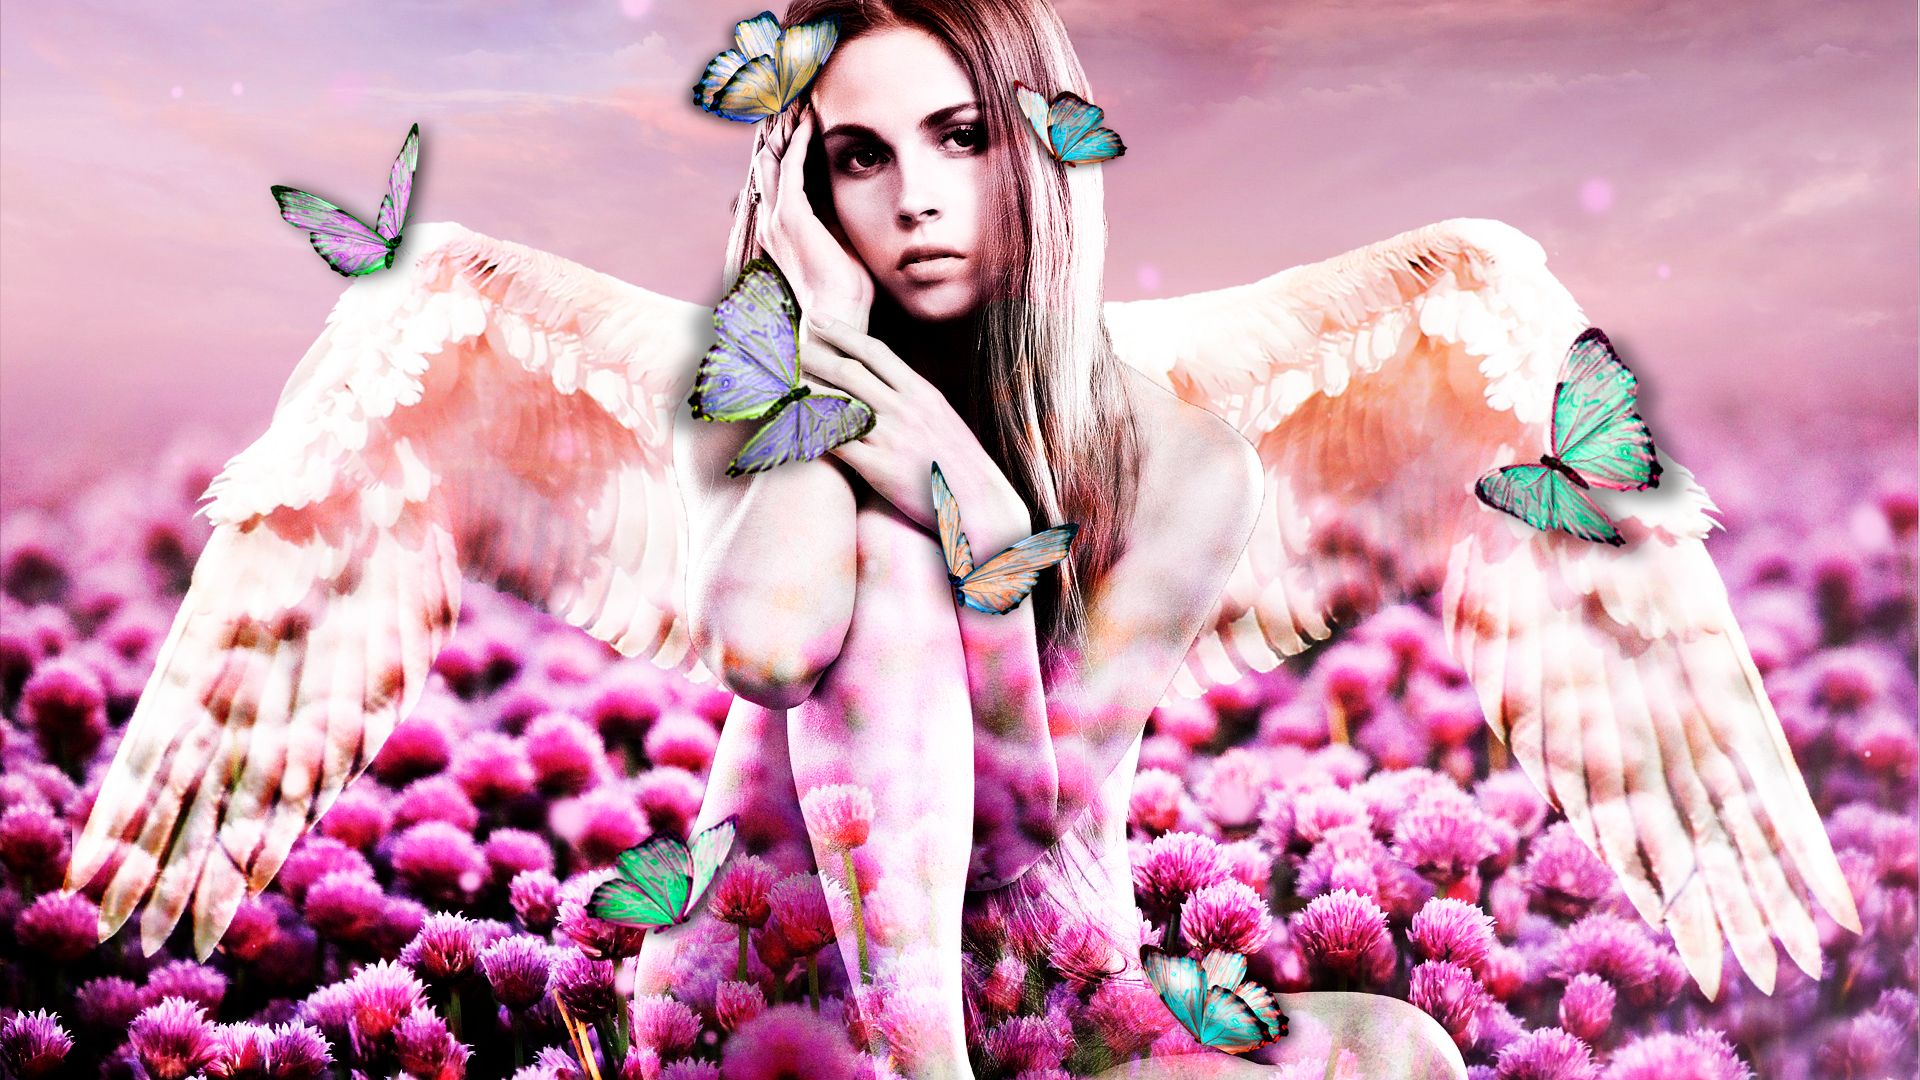 Angel de las mariposas 5.jpg